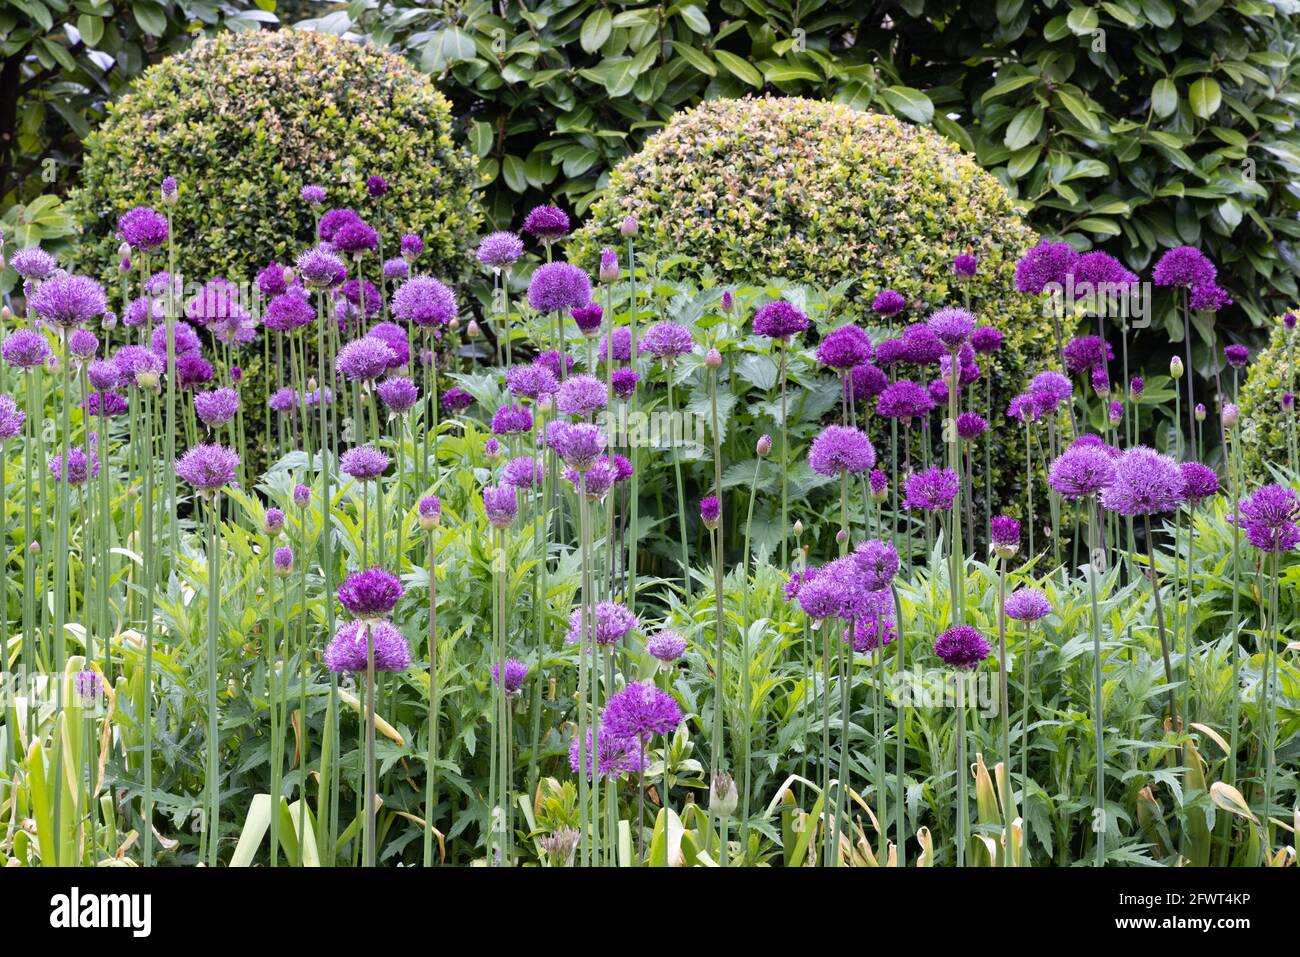 Allium Purple Sensation growing in a herbaceous border - purple flowers on stalks flowering in May; UK Stock Photo